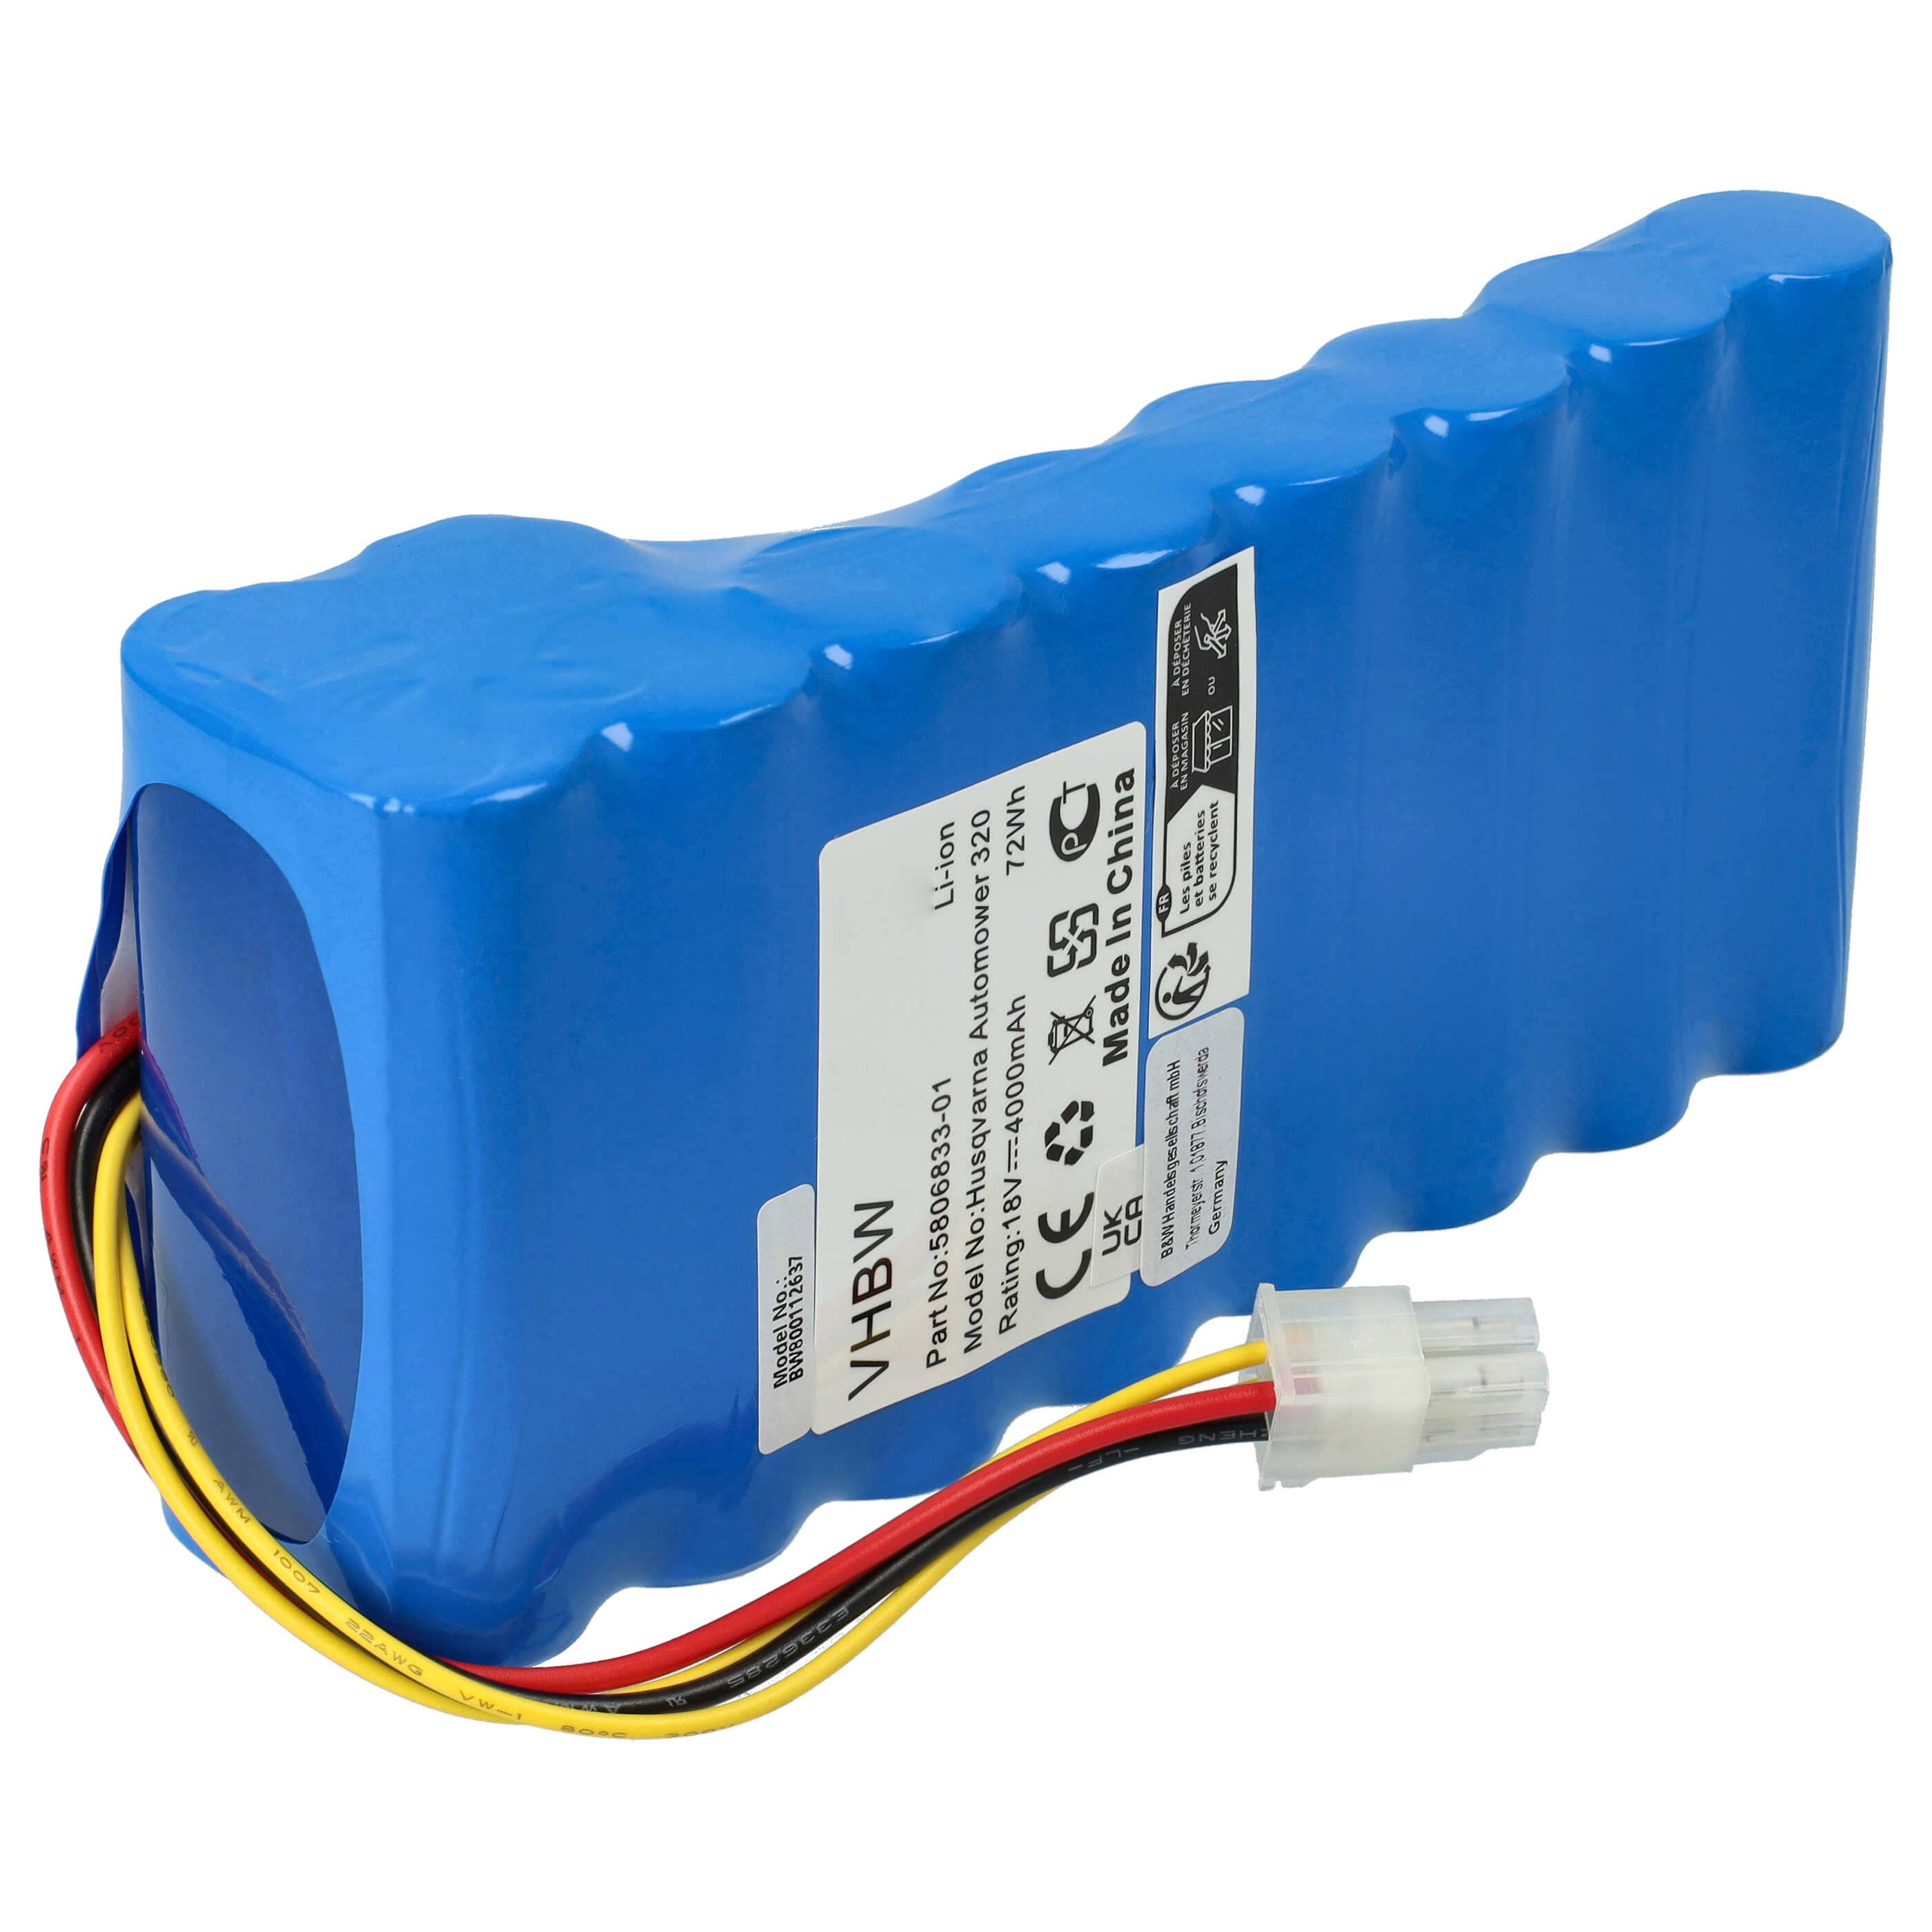 Lawnmower Battery Pack Replacement for Husqvarna 580 68 33-01, 580683301, 5806833-01 - 4000mAh 18V Li-Ion